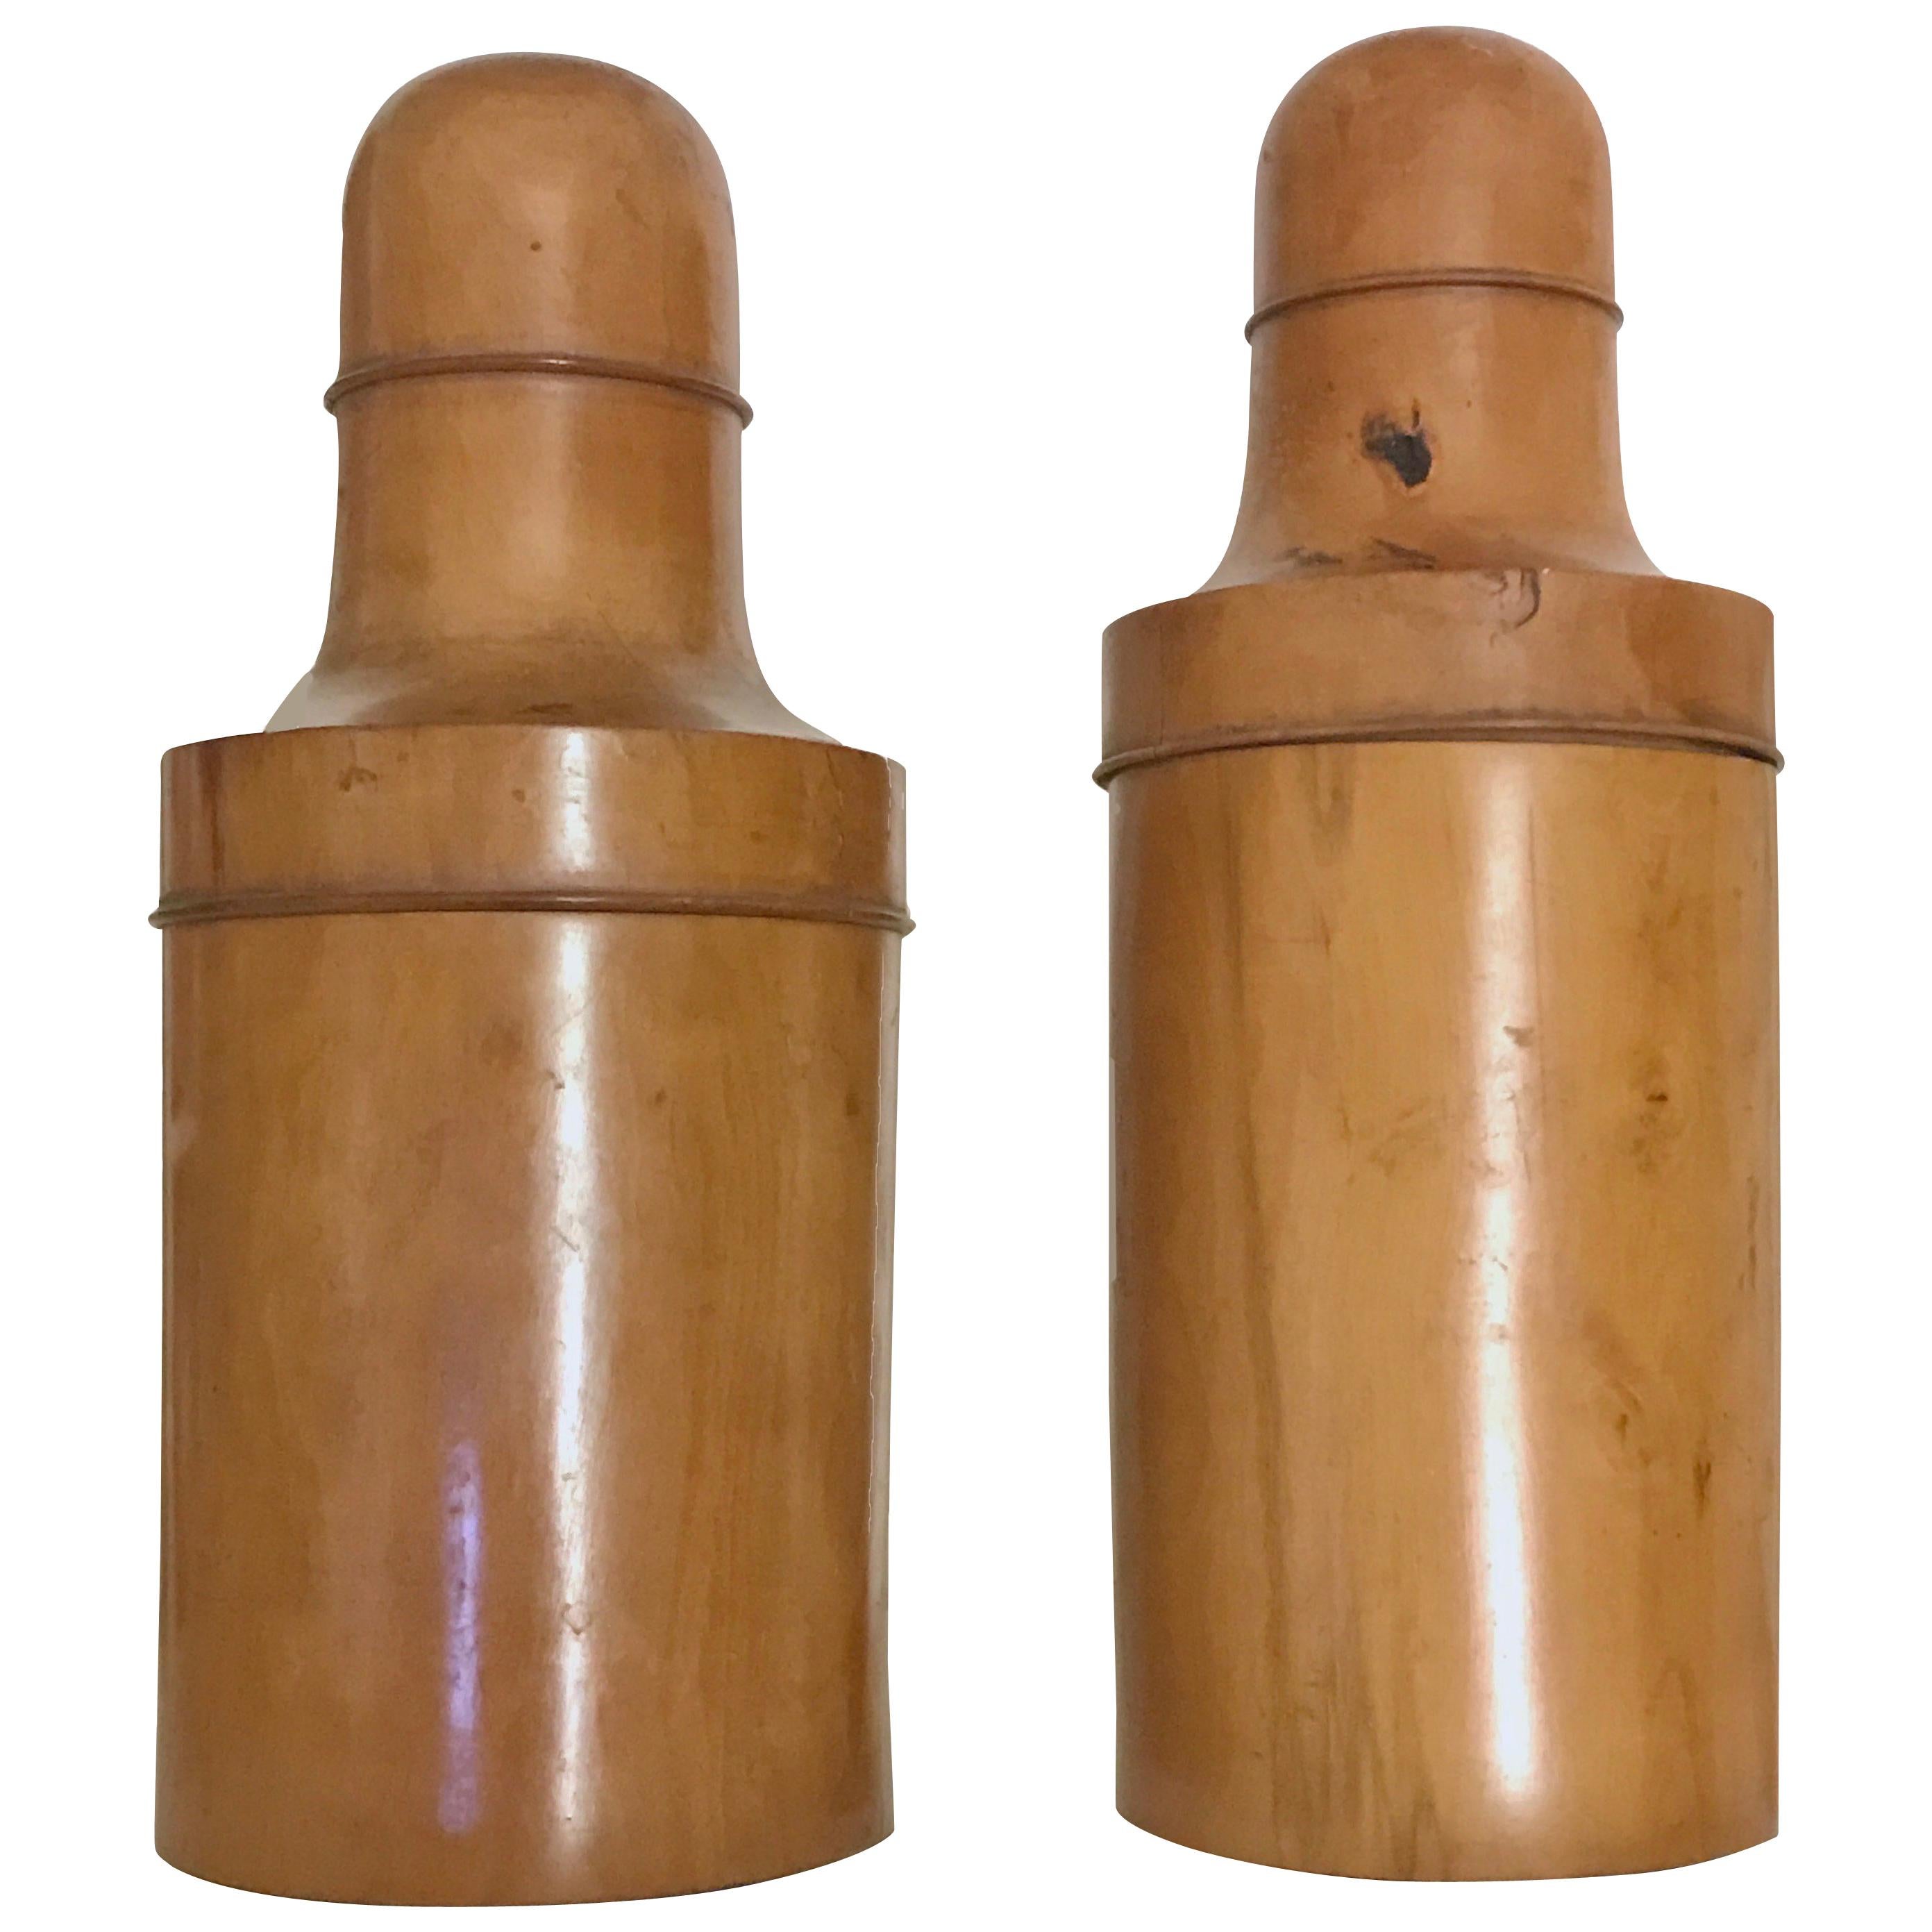 Pair of Early 20th Century Boxwood Italian Pharmacy Bottles